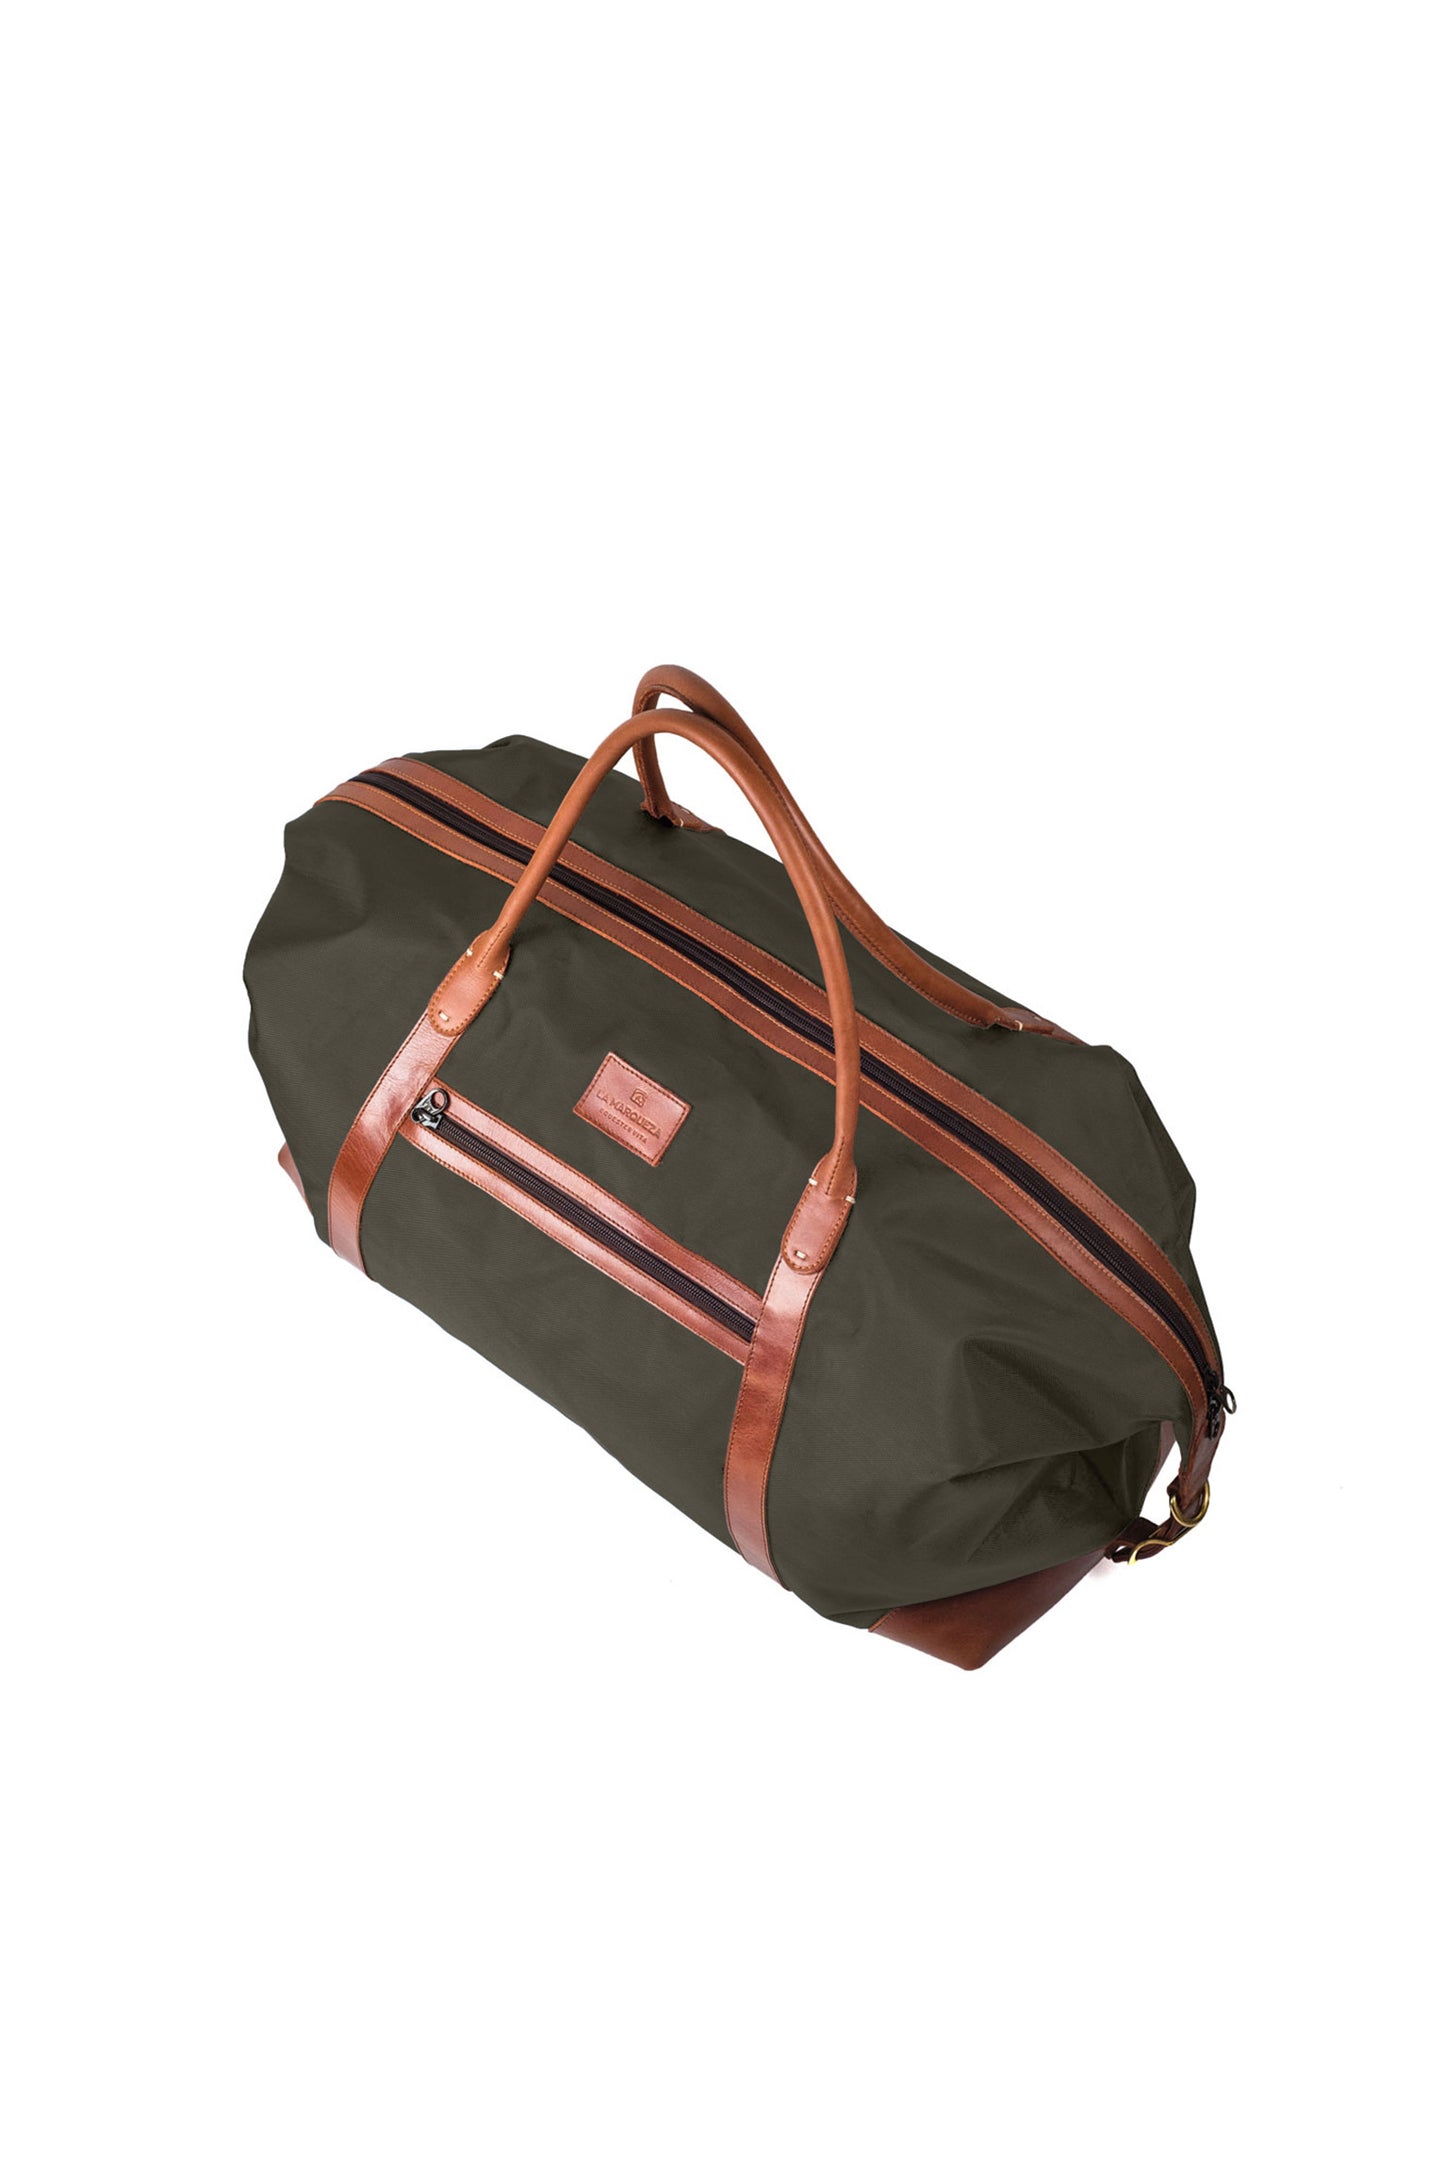 Polo Travel Bag- Green